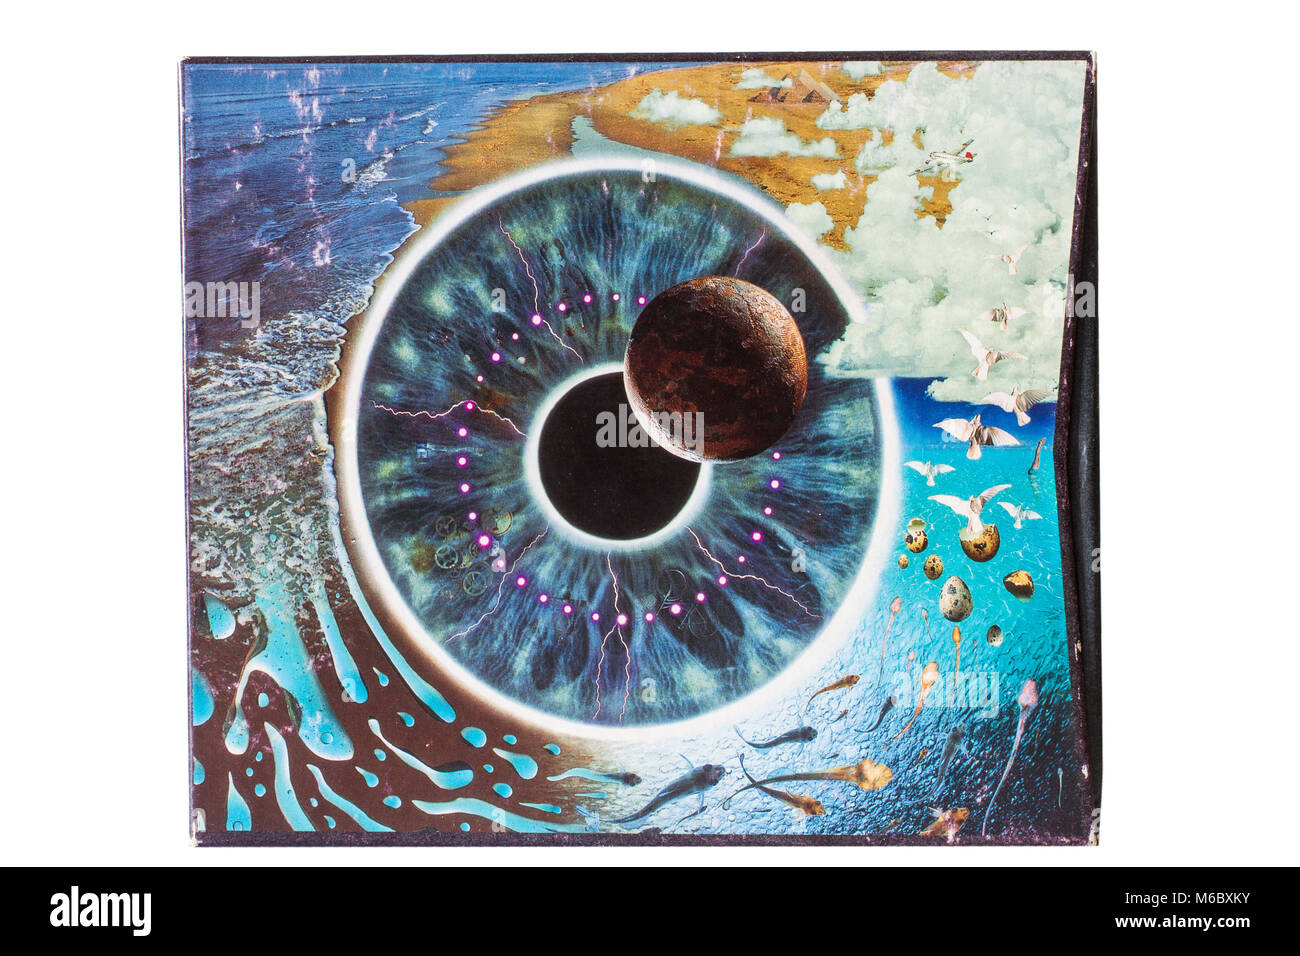 Pink Floyd, Pulse, CD original album Stock Photo - Alamy